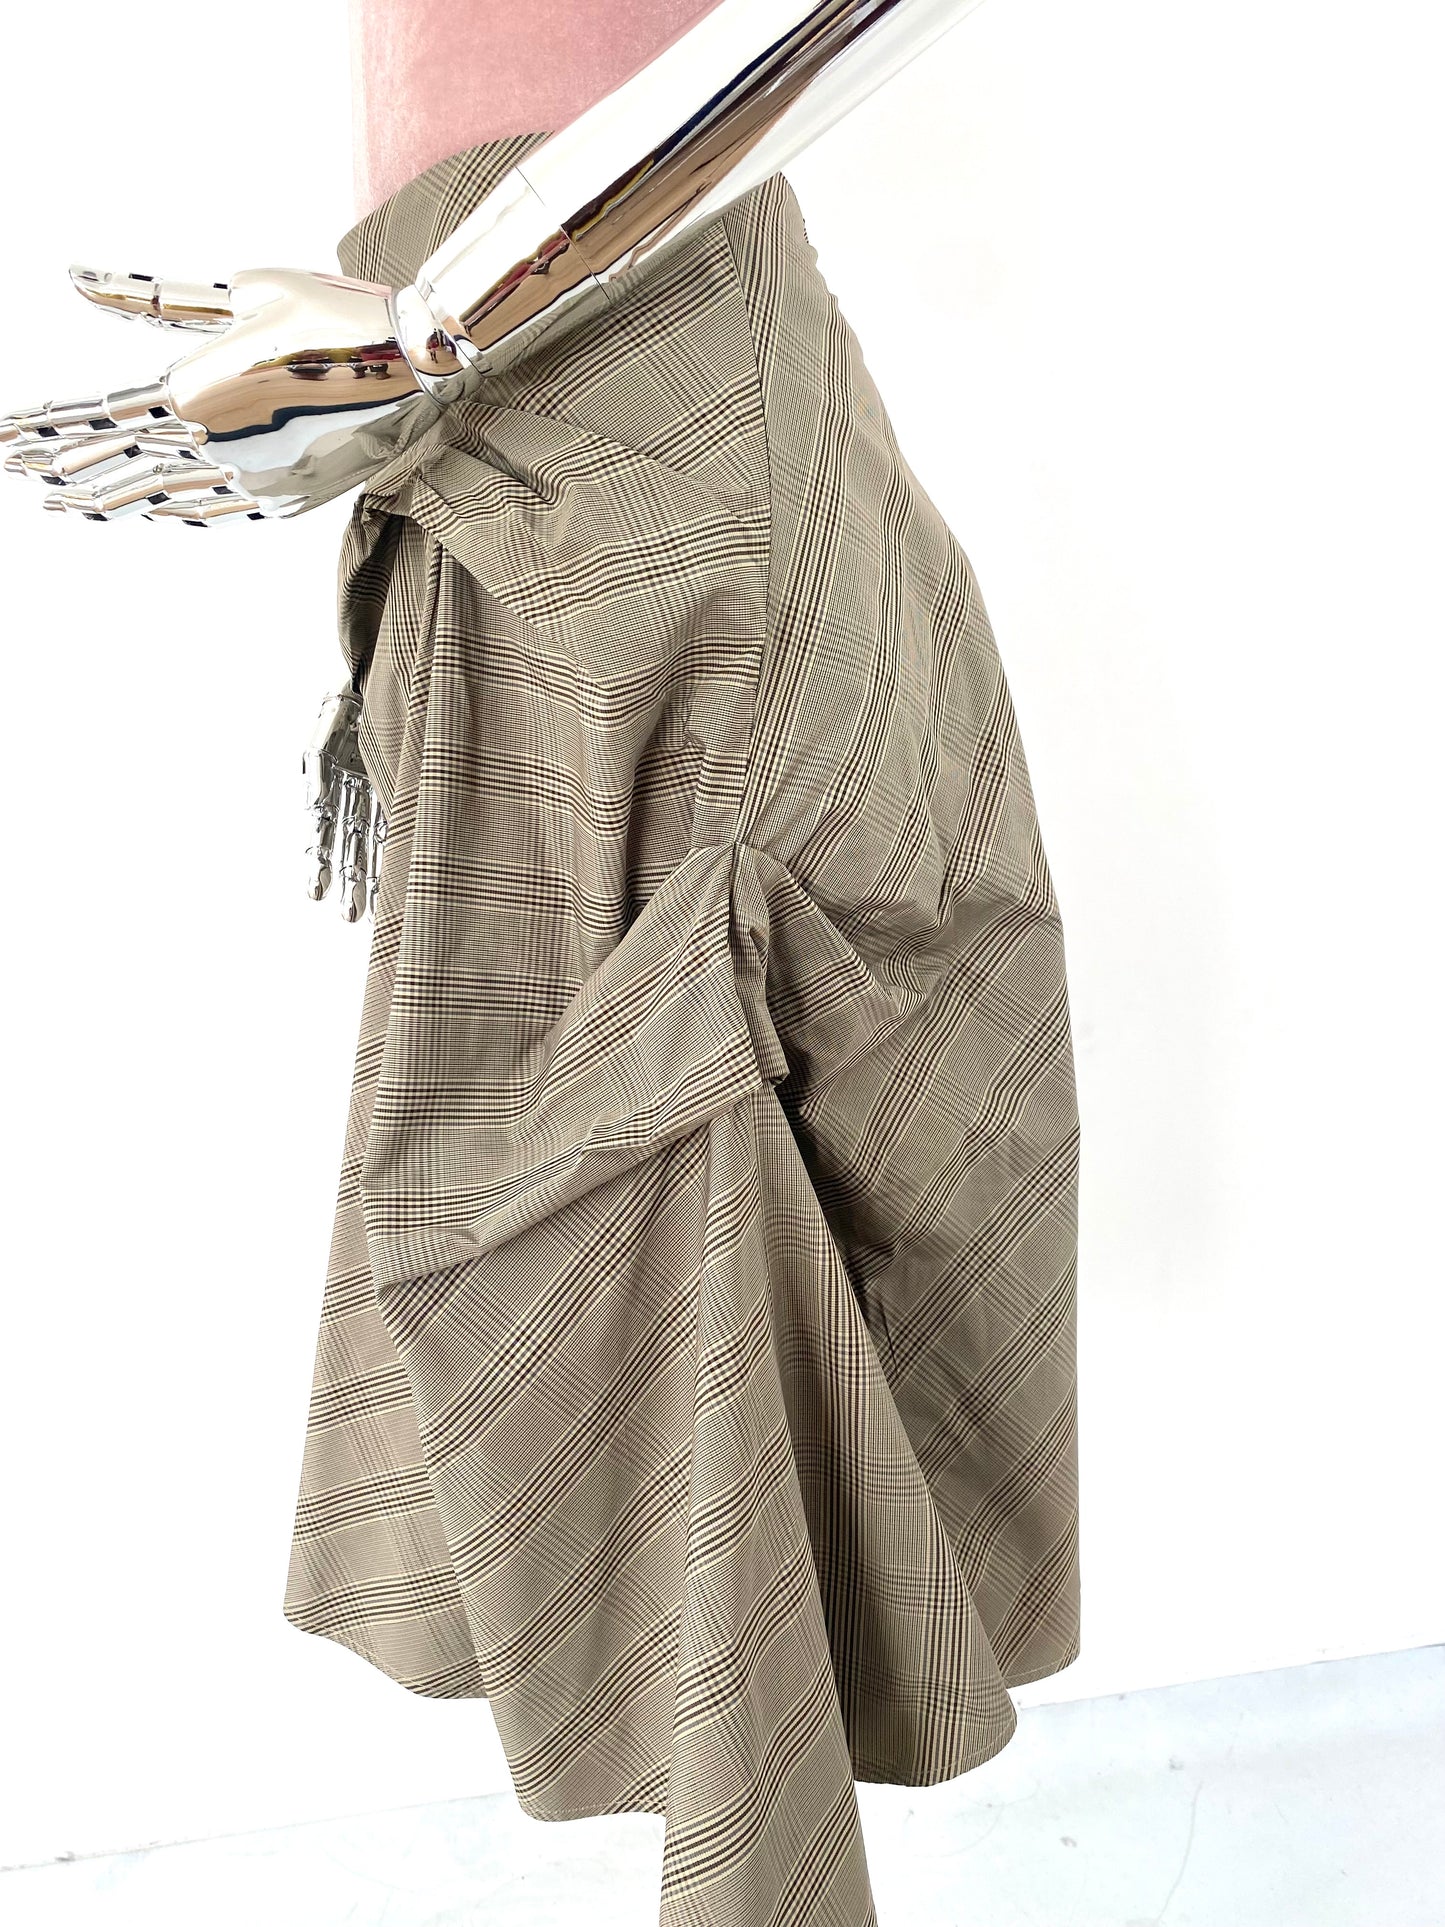 Flamenco style skirt in Check Microfibres  Fabric ,Khaki check flare Skirt,Skirt with Pocket.